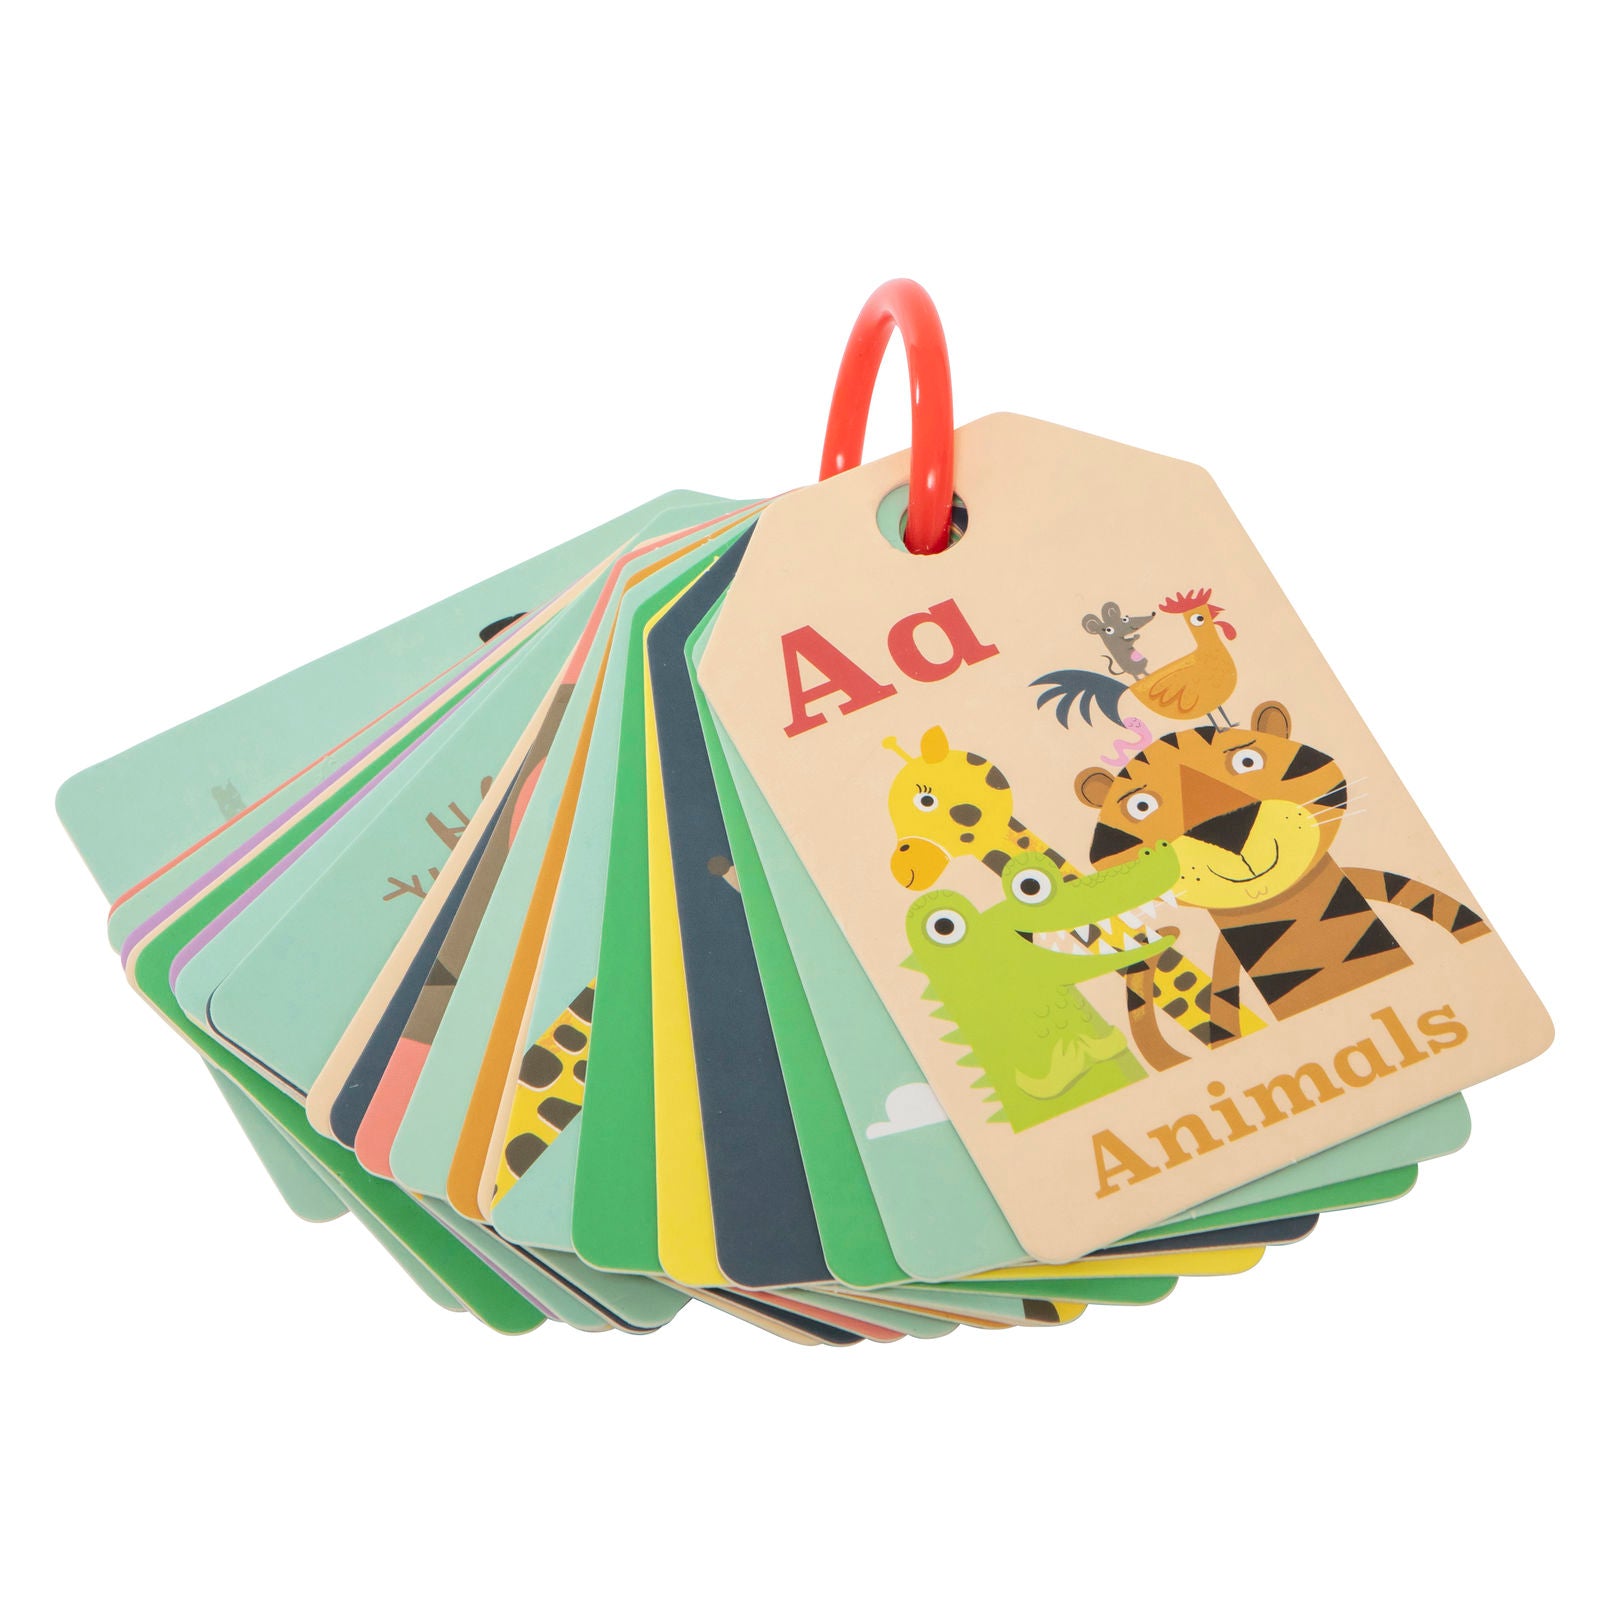 Tiger Tribe Alphabet Flash Cards – Animal ABC